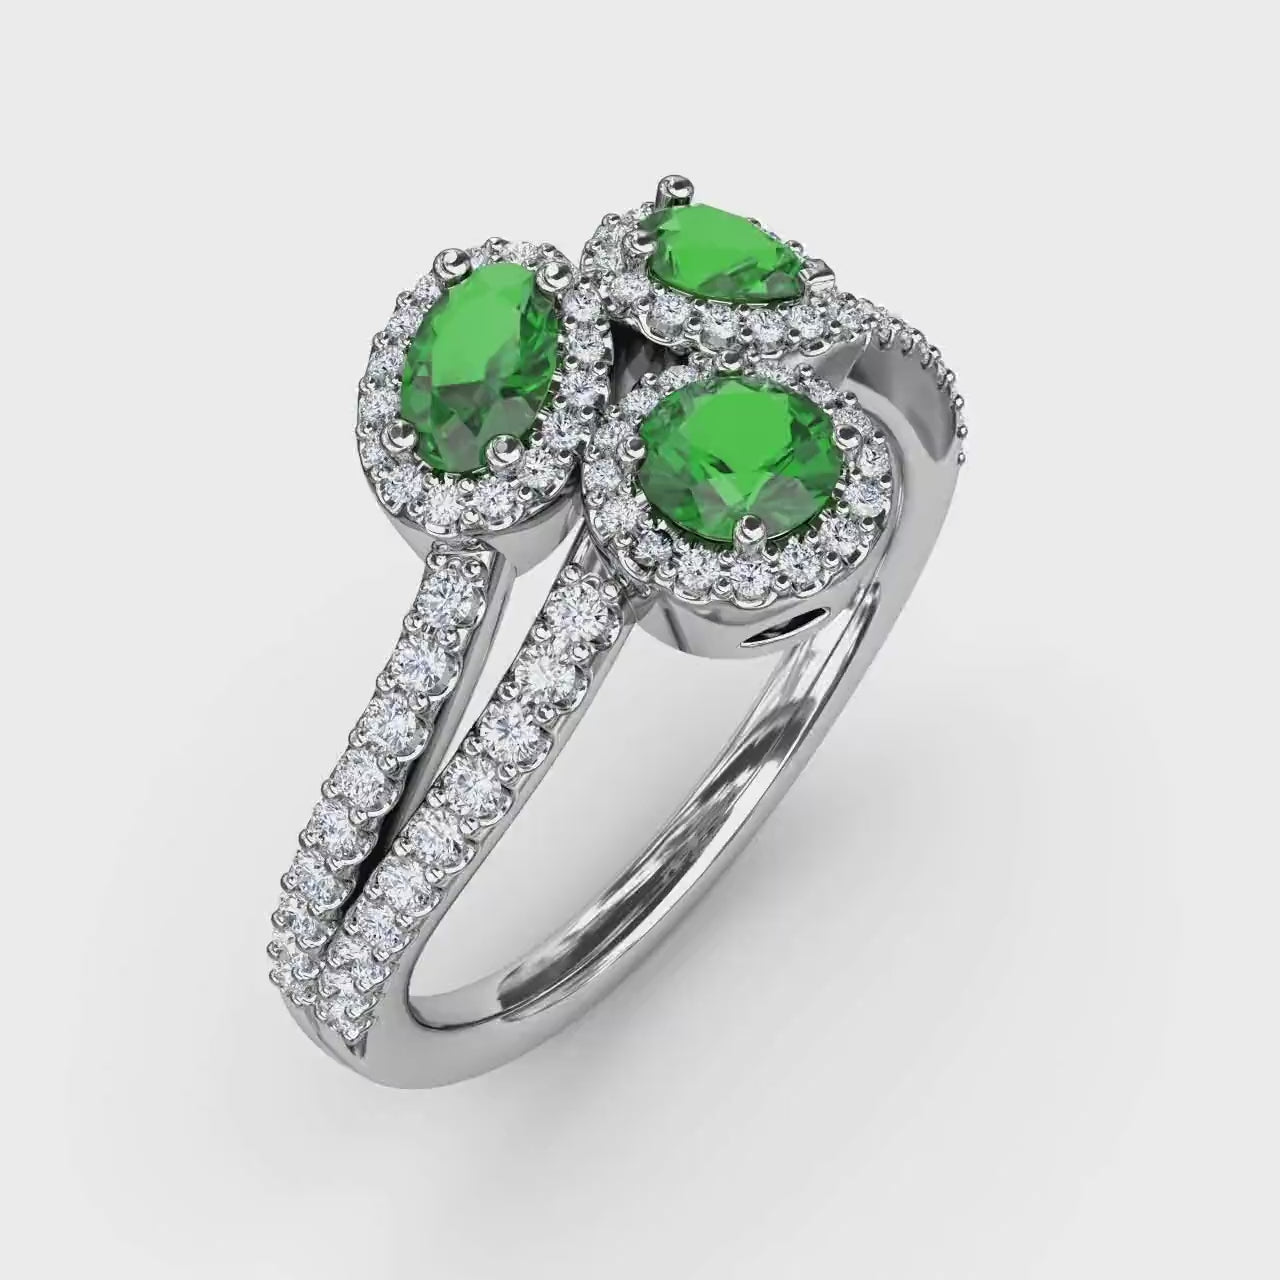 Lab Certified Zambian Emerald Ring 6.25 Ratti Green Panna Ring Gemstone  with Certificat Panchdhatu Gold Plated